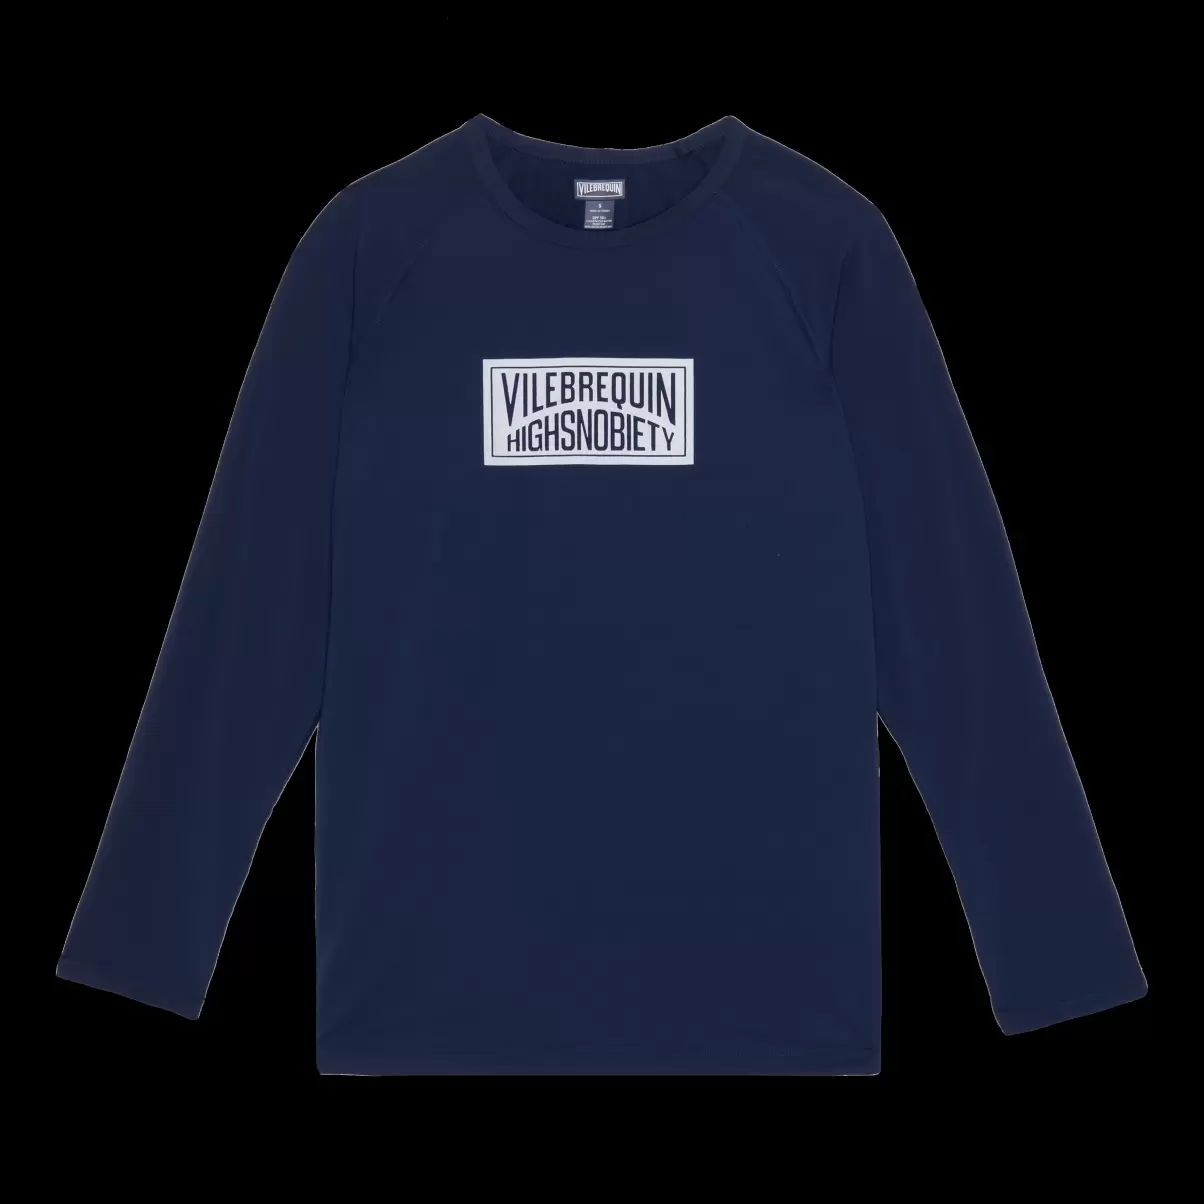 Promoción Press Blue / Azul Camisetas Anti-Uv Hombre Camiseta De Baño Con Protección Solar Para Hombre - Vilebrequin X Highsnobiety - 3